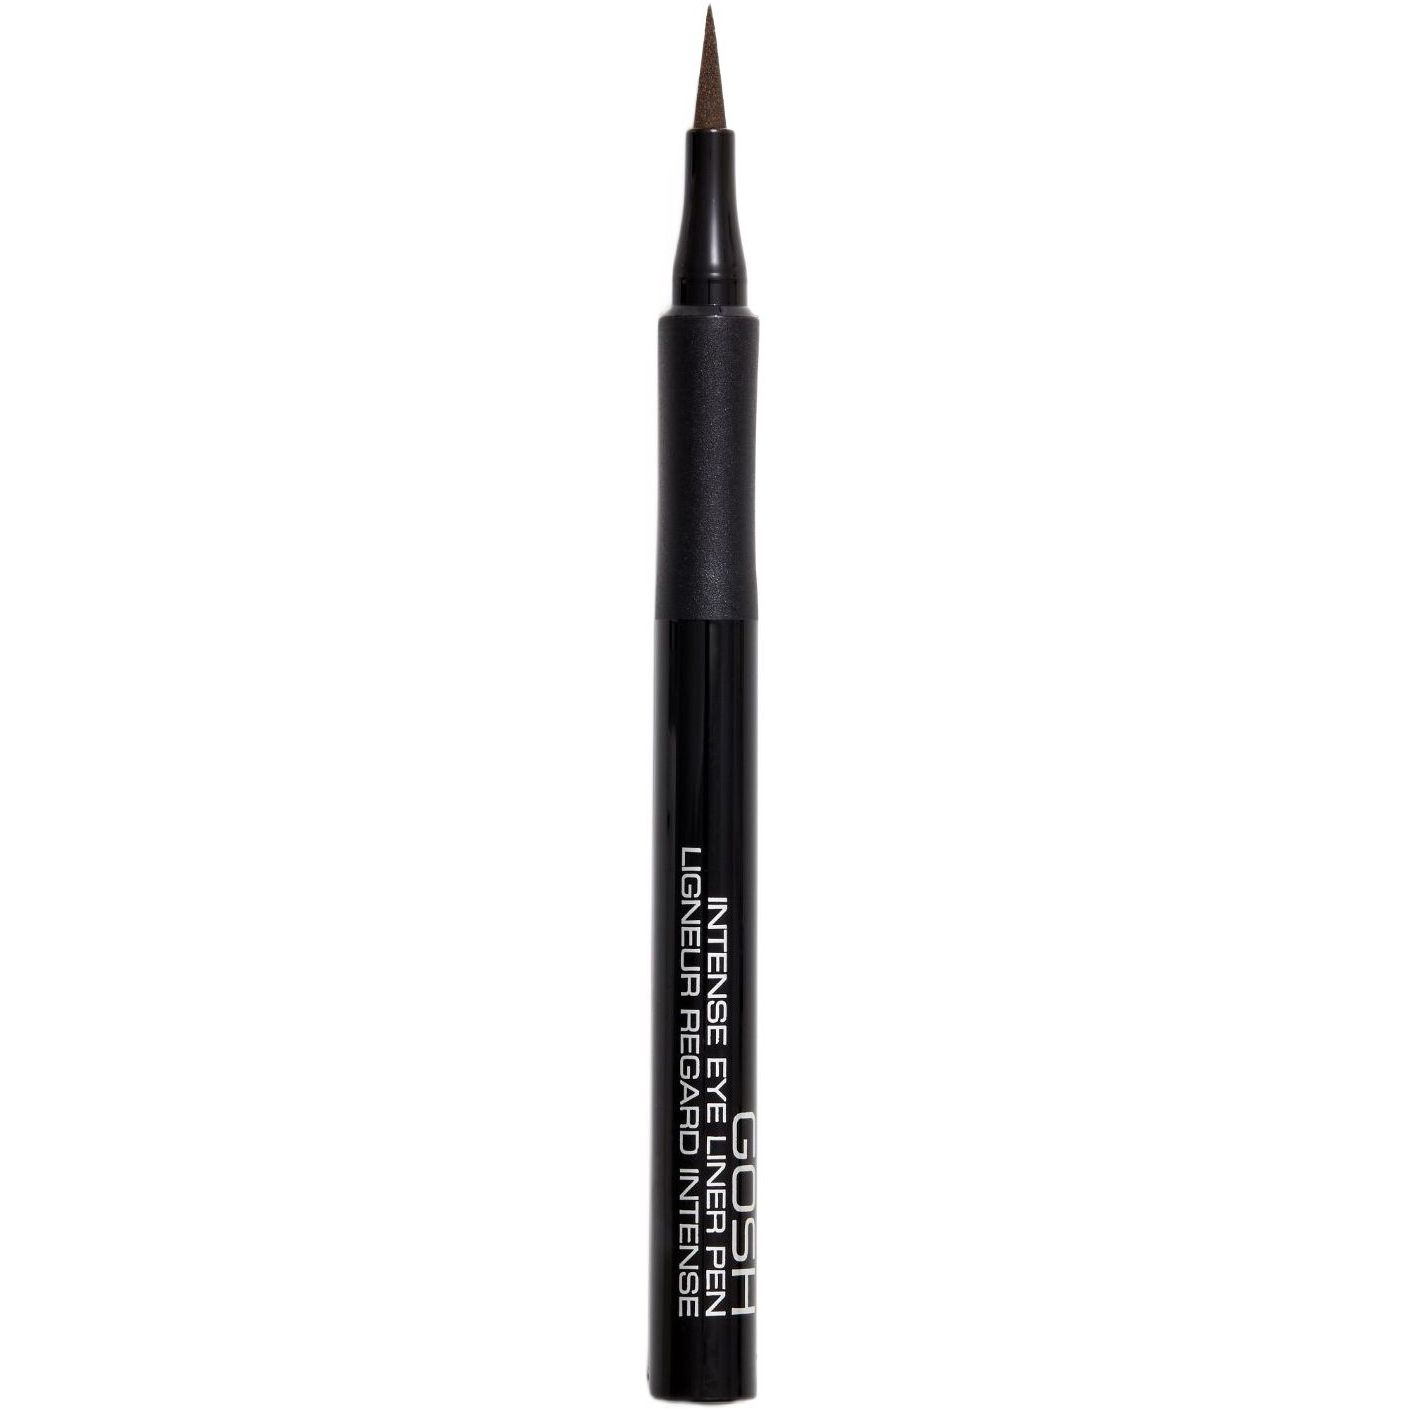 Подводка для глаз Gosh Intense Eye Liner Pen, тон 03 brown, 1 мл - фото 1